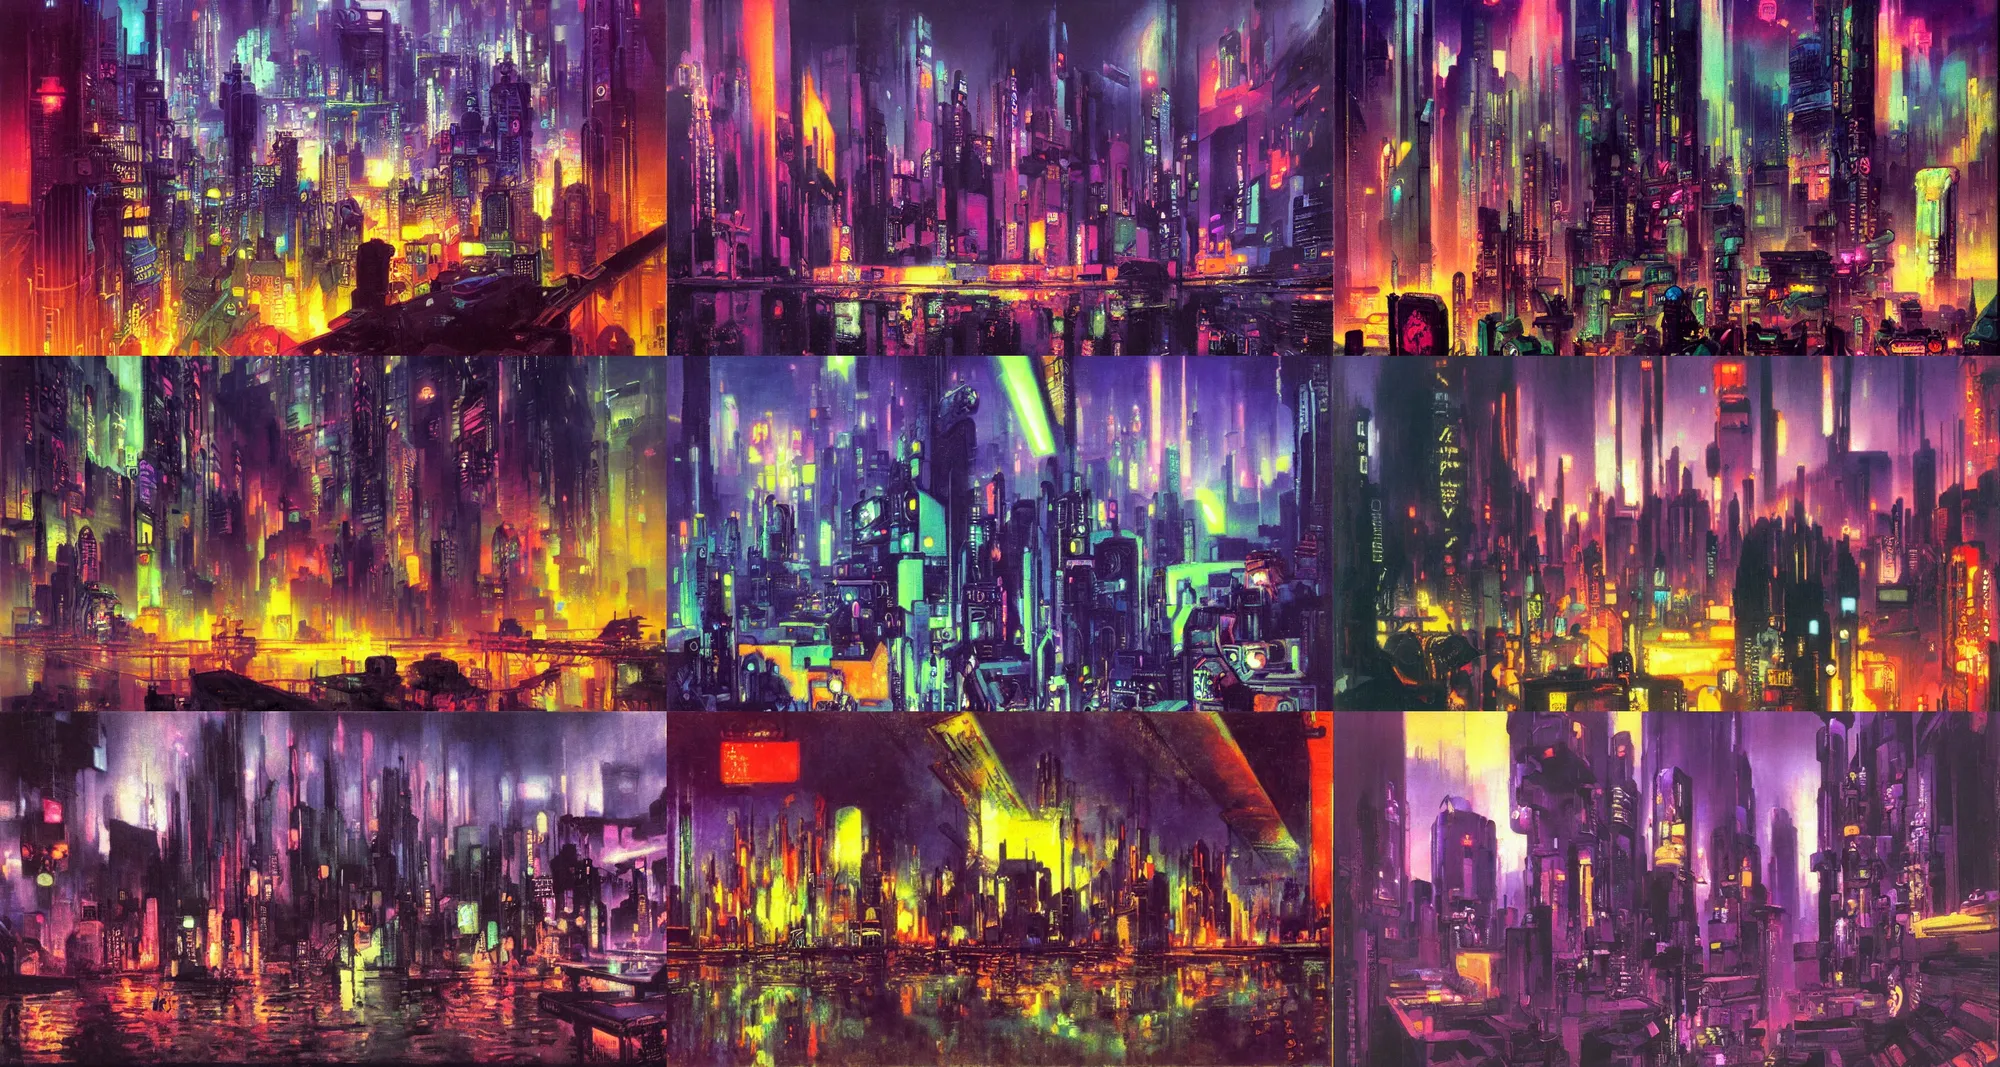 Prompt: cyberpunk cityscape by matisse, rembrandt, paul lehr